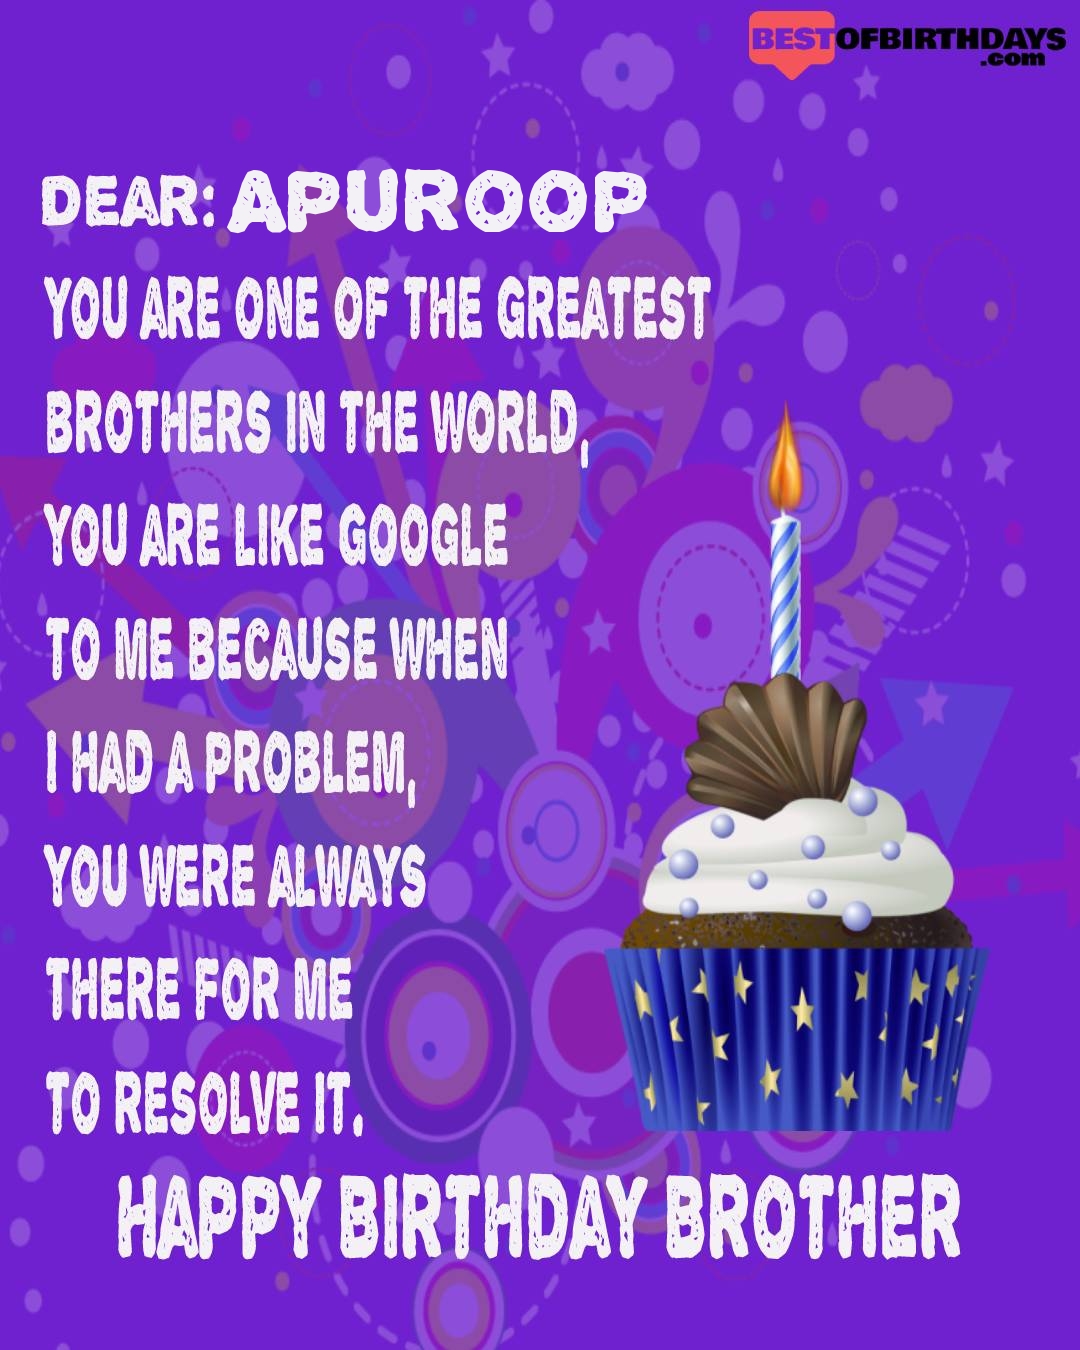 Happy birthday apuroop bhai brother bro